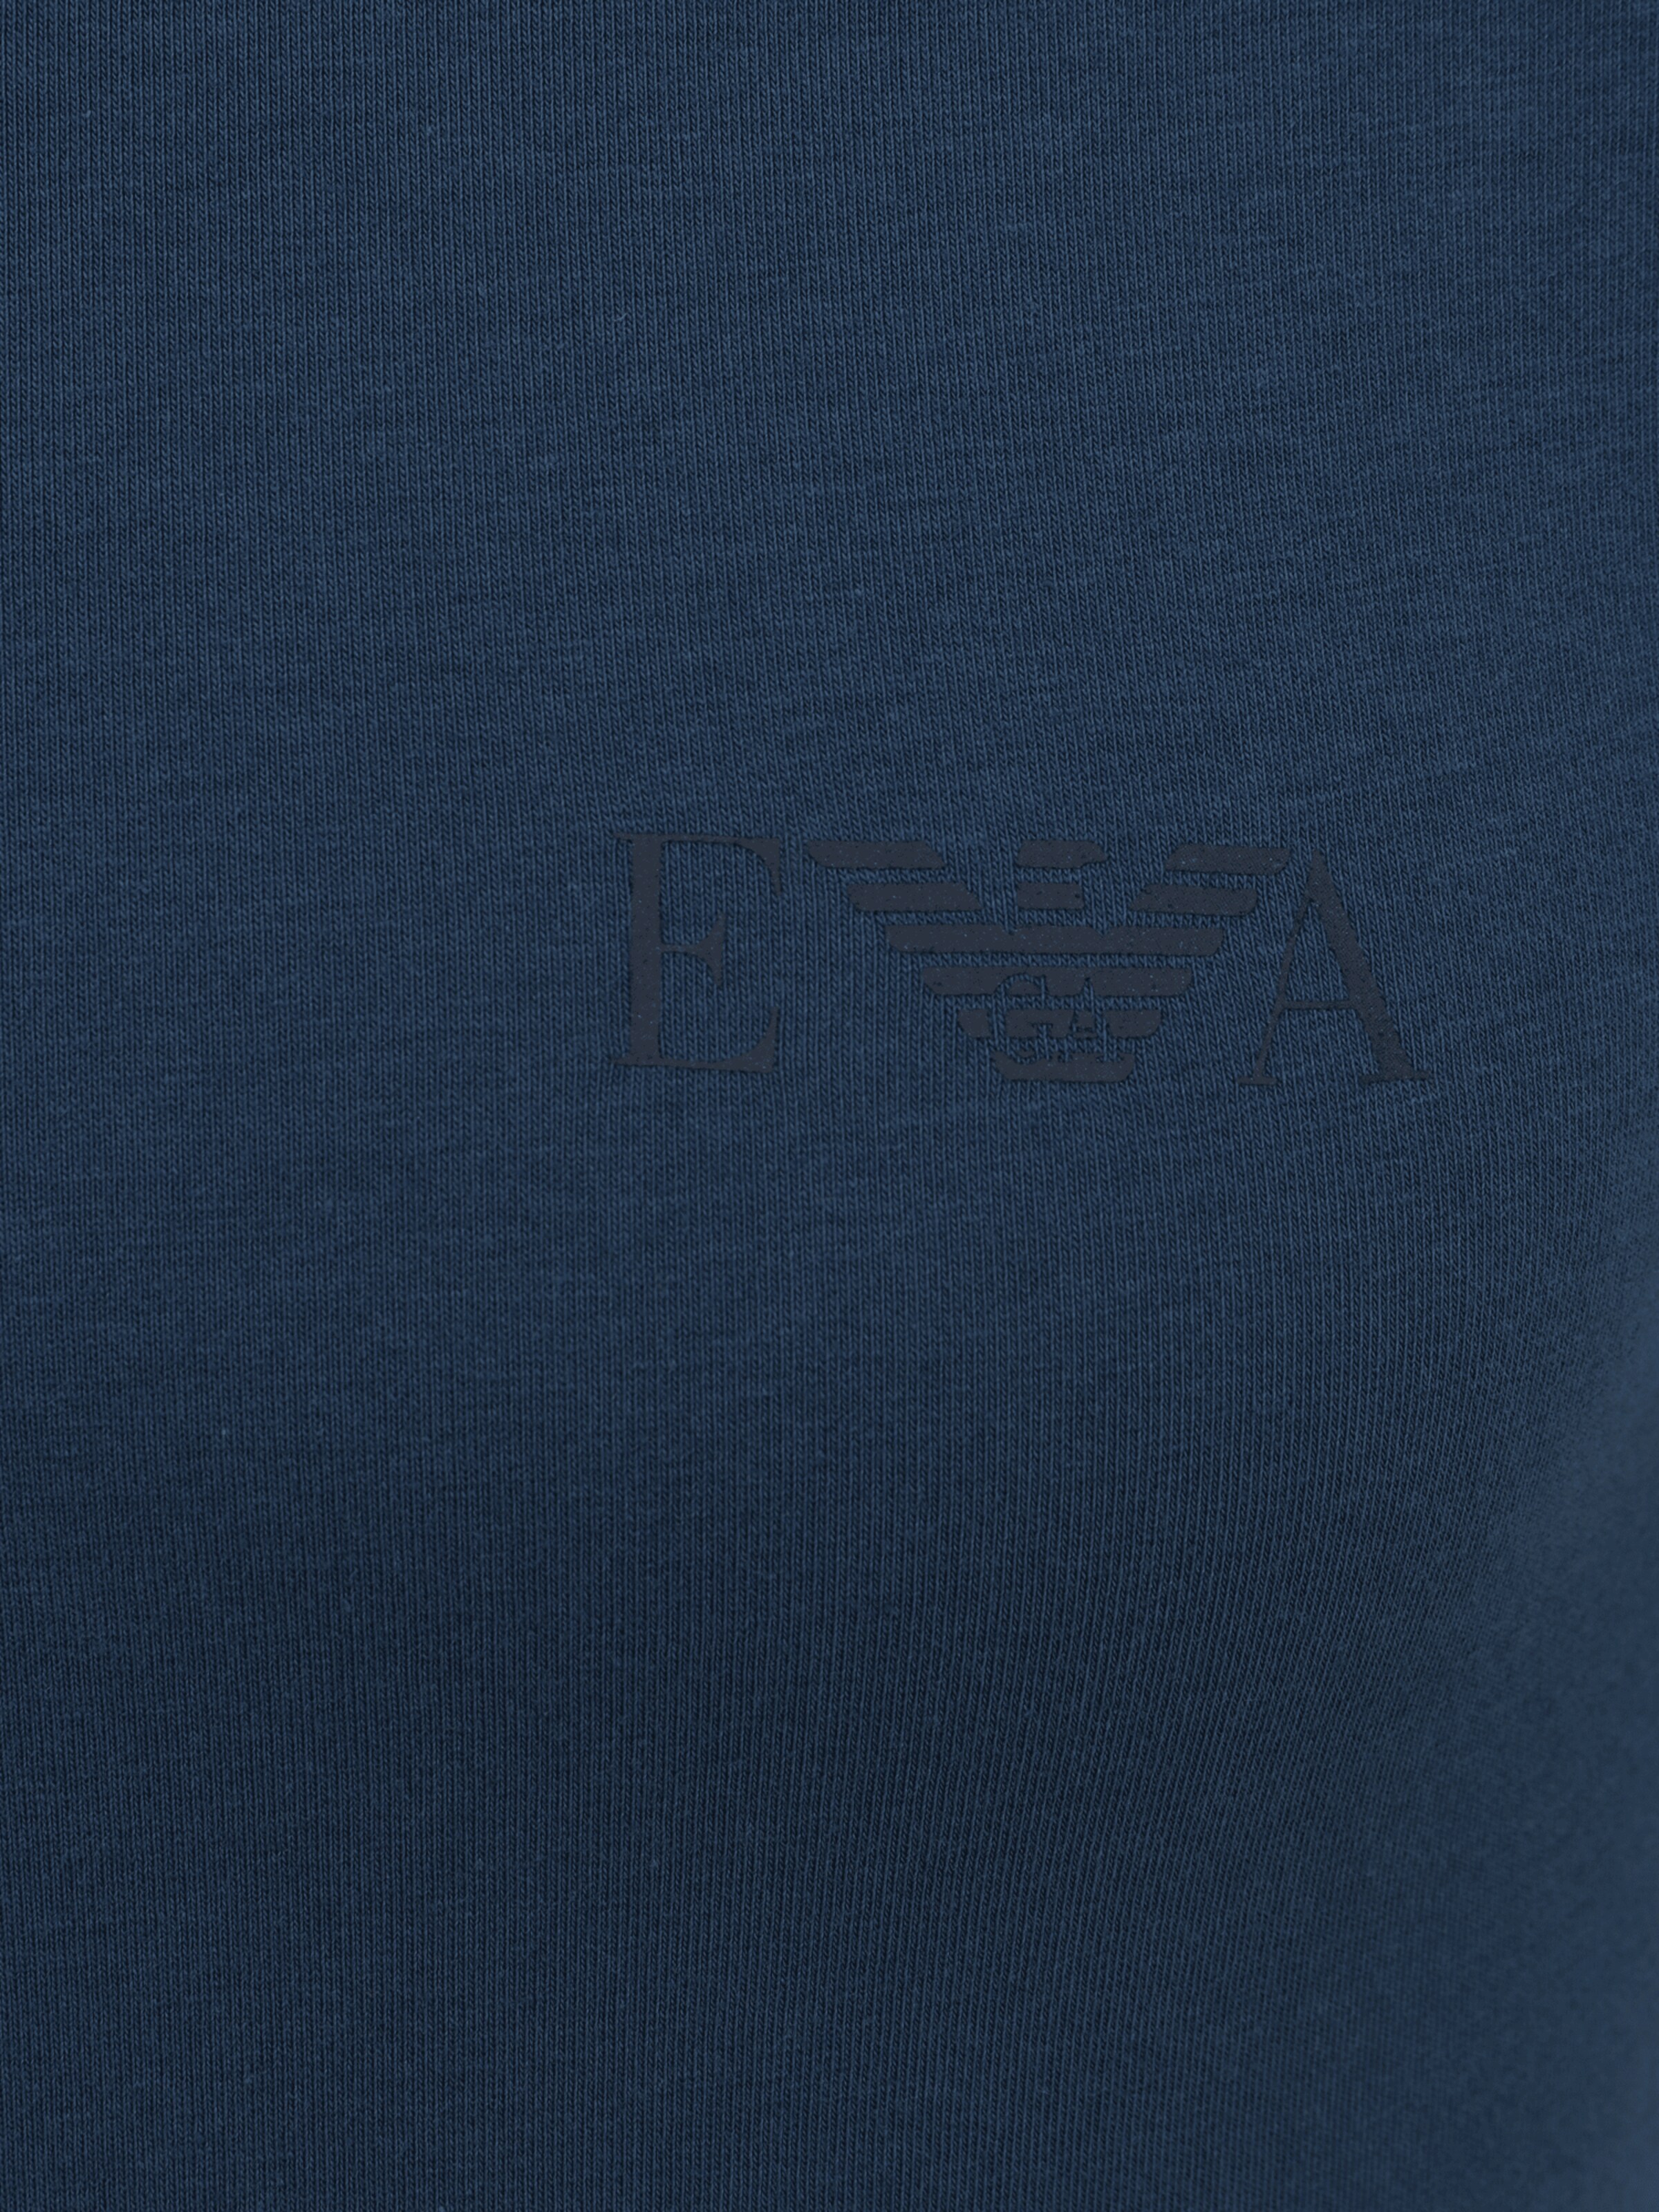 Premium T-Shirt Emporio Armani en Bleu Cobalt, Gentiane 